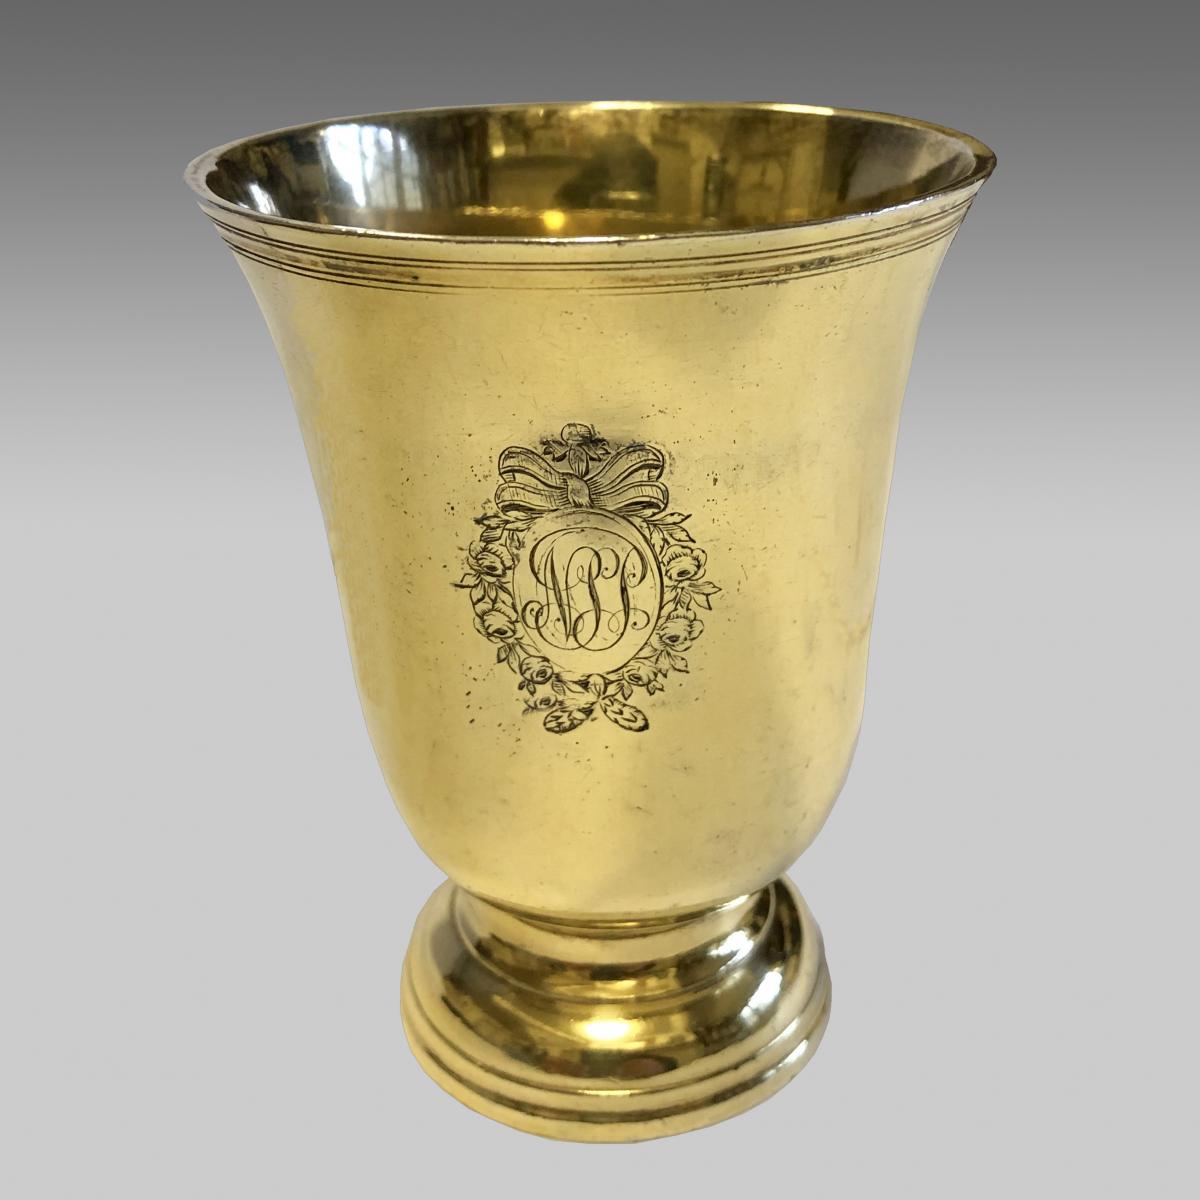 18th century silver-gilt beaker